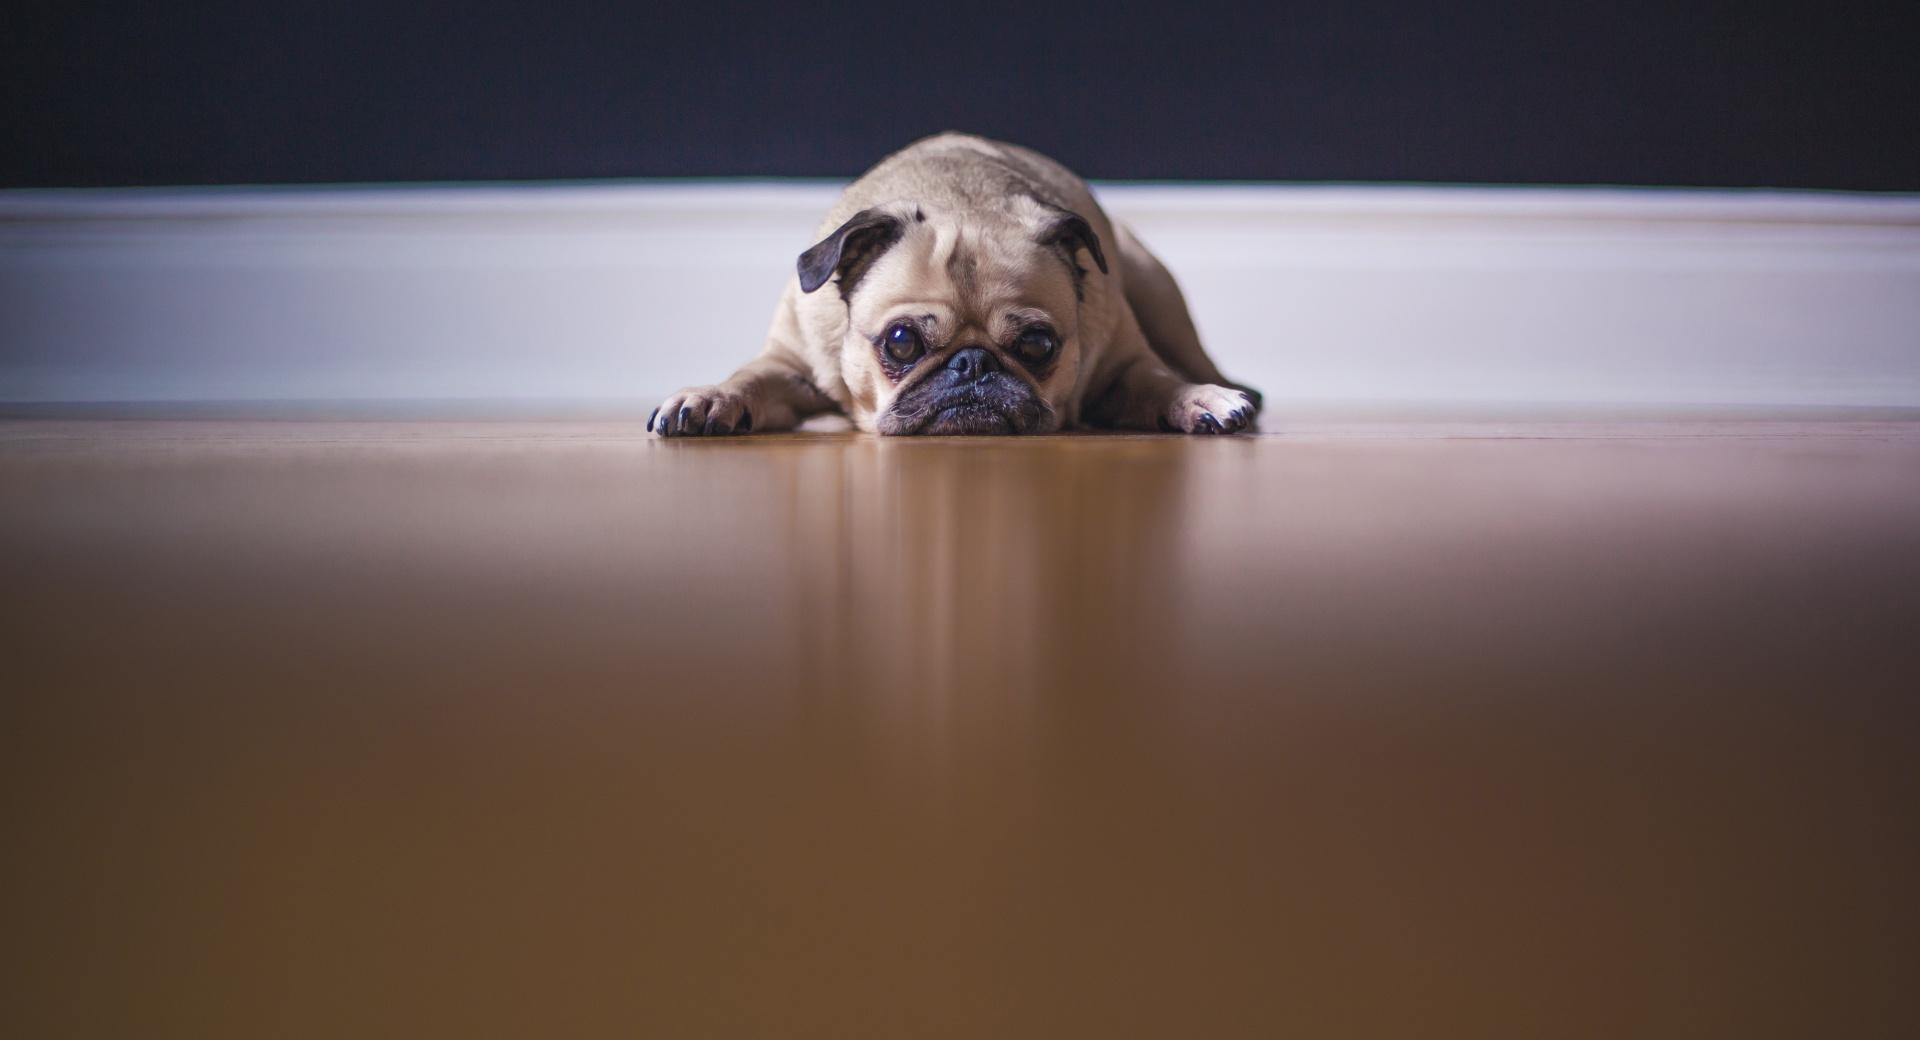 Saddest Pug Dog at 1600 x 1200 size wallpapers HD quality